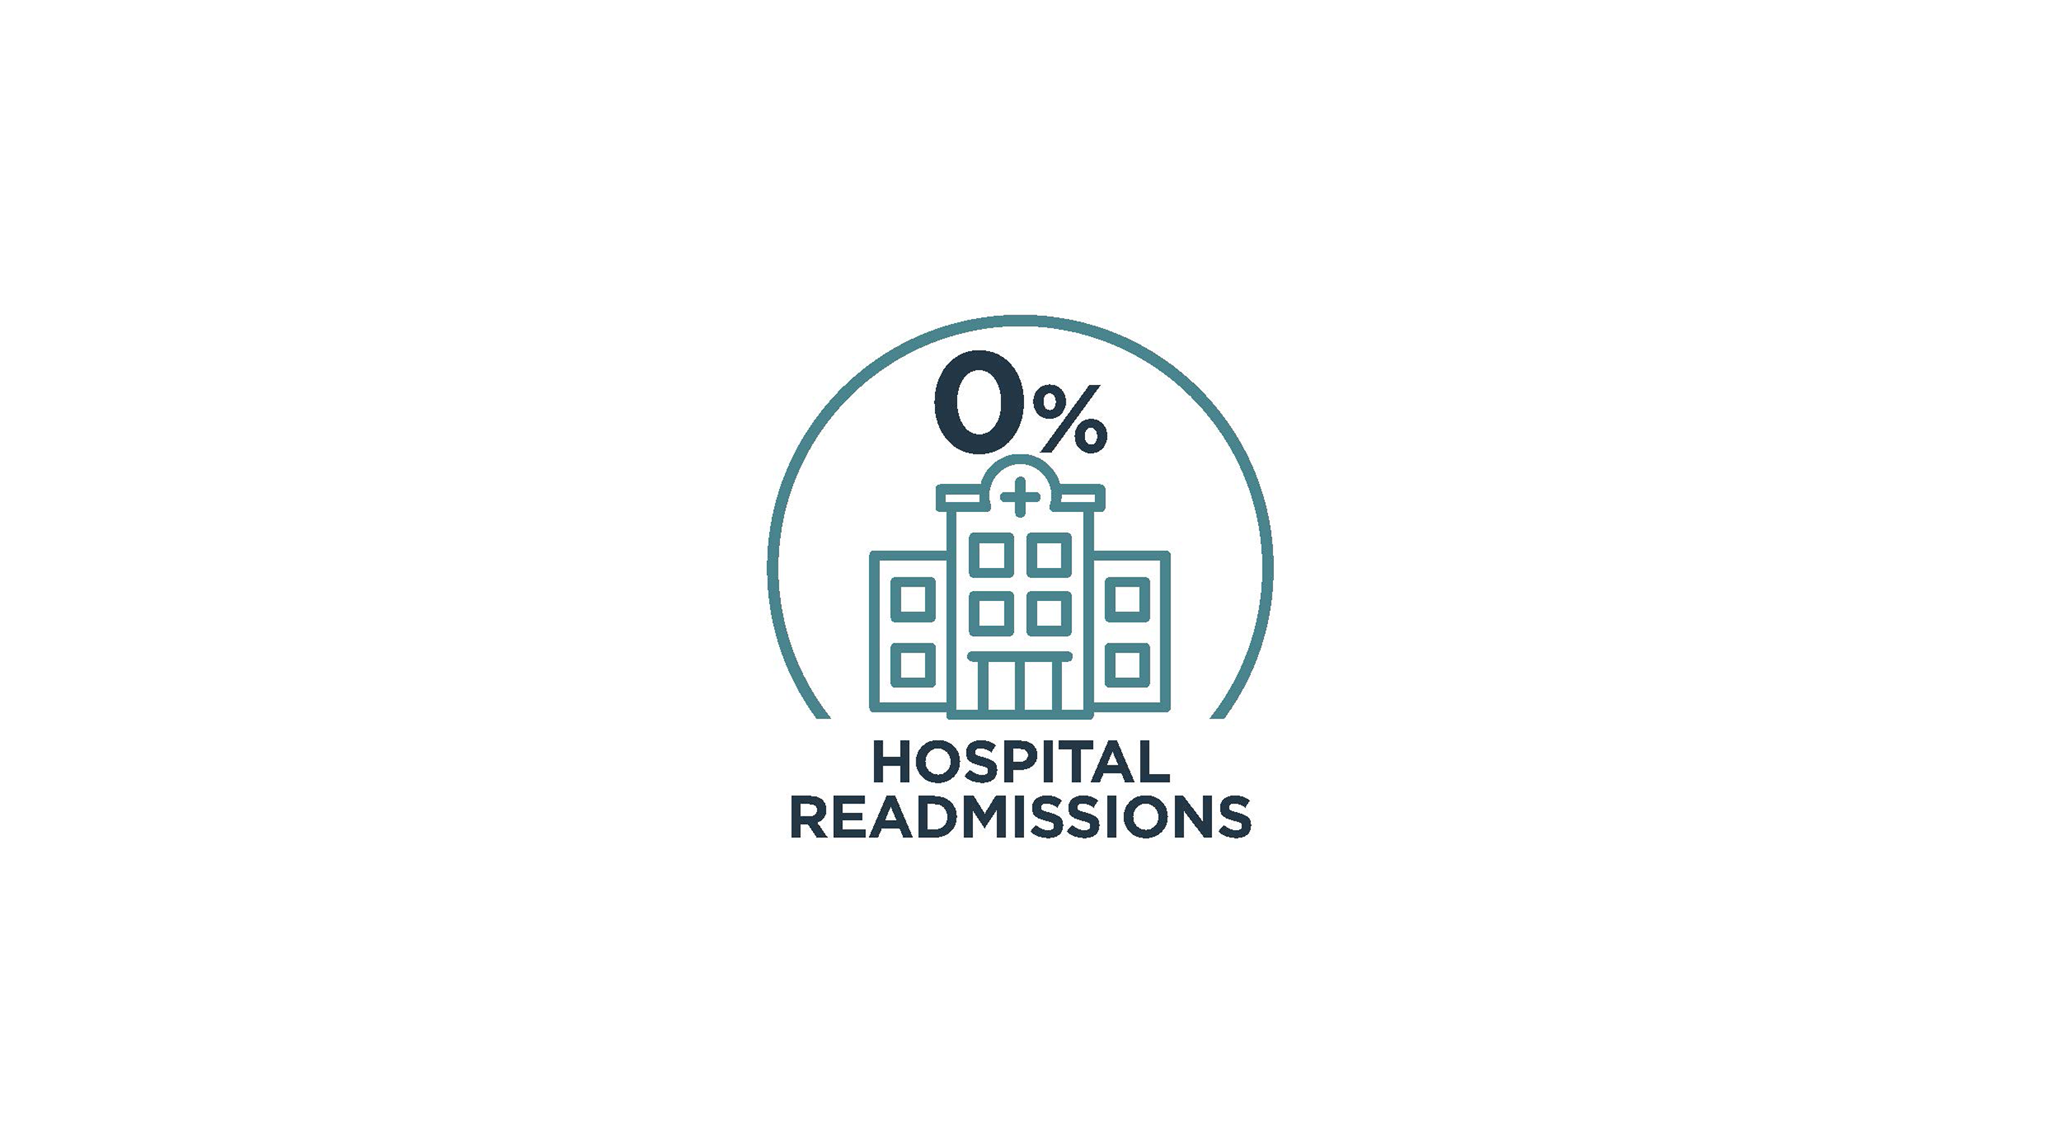 No Hospital Readmissions illustration